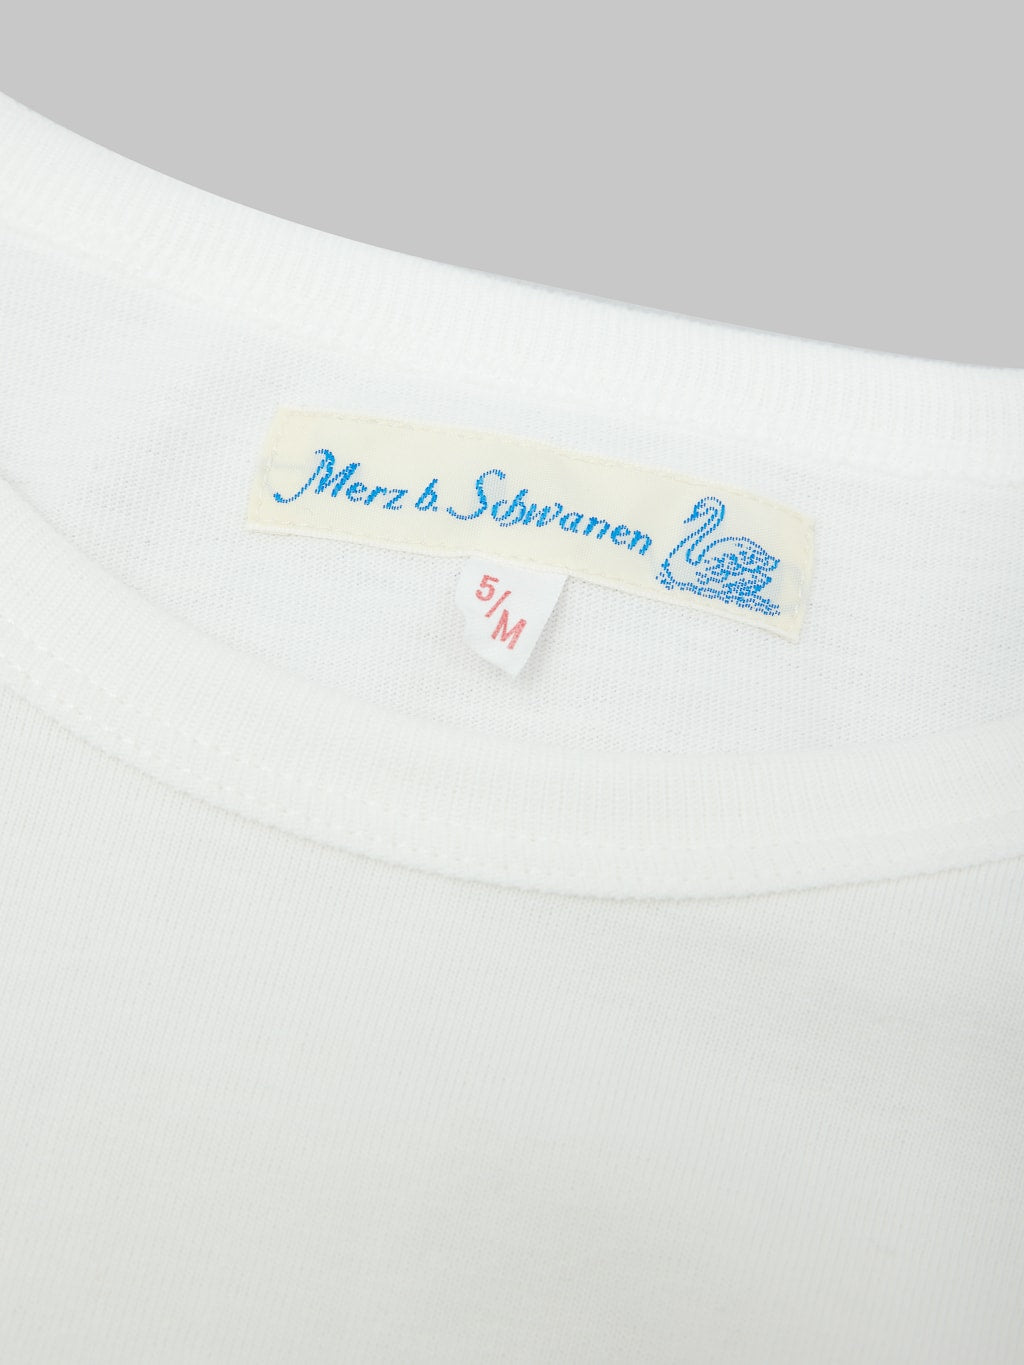 merz b schwanen good originals loopwheeled Tshirt classic white inner tag